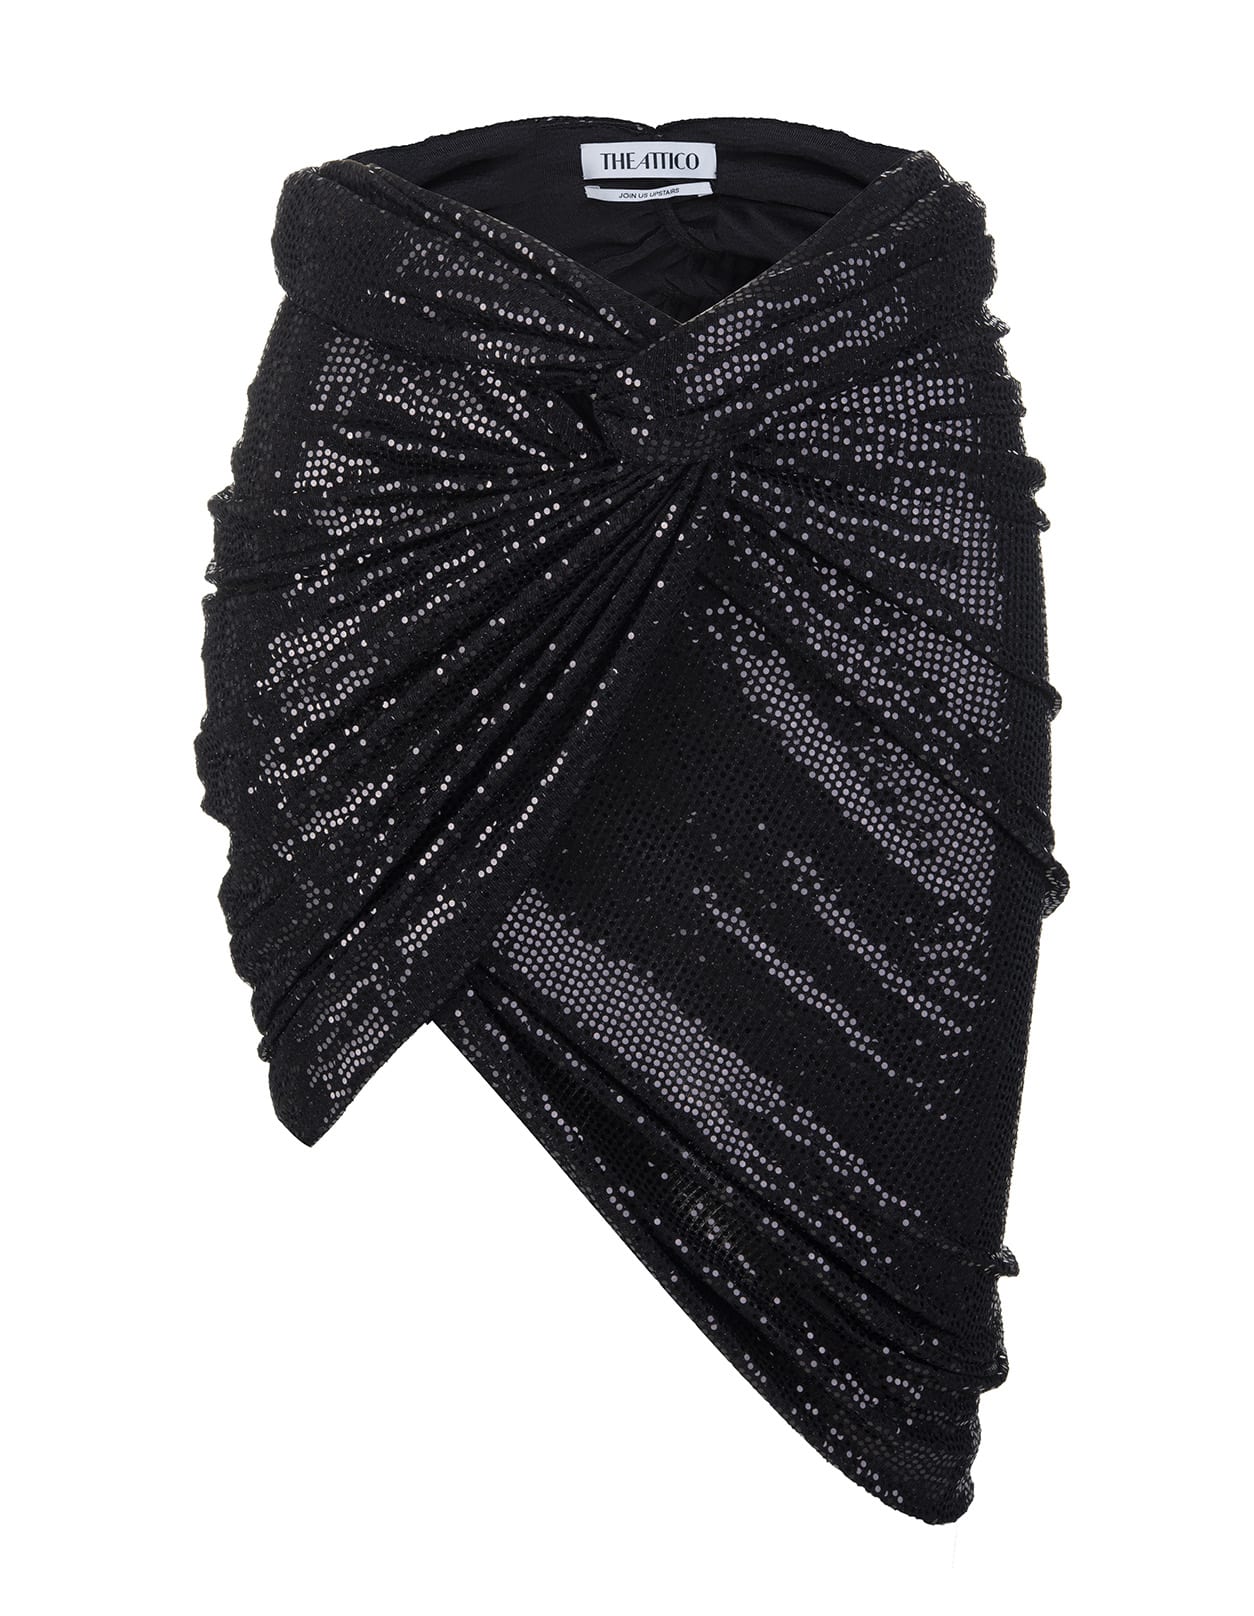 The Attico Black Metallic Skirt